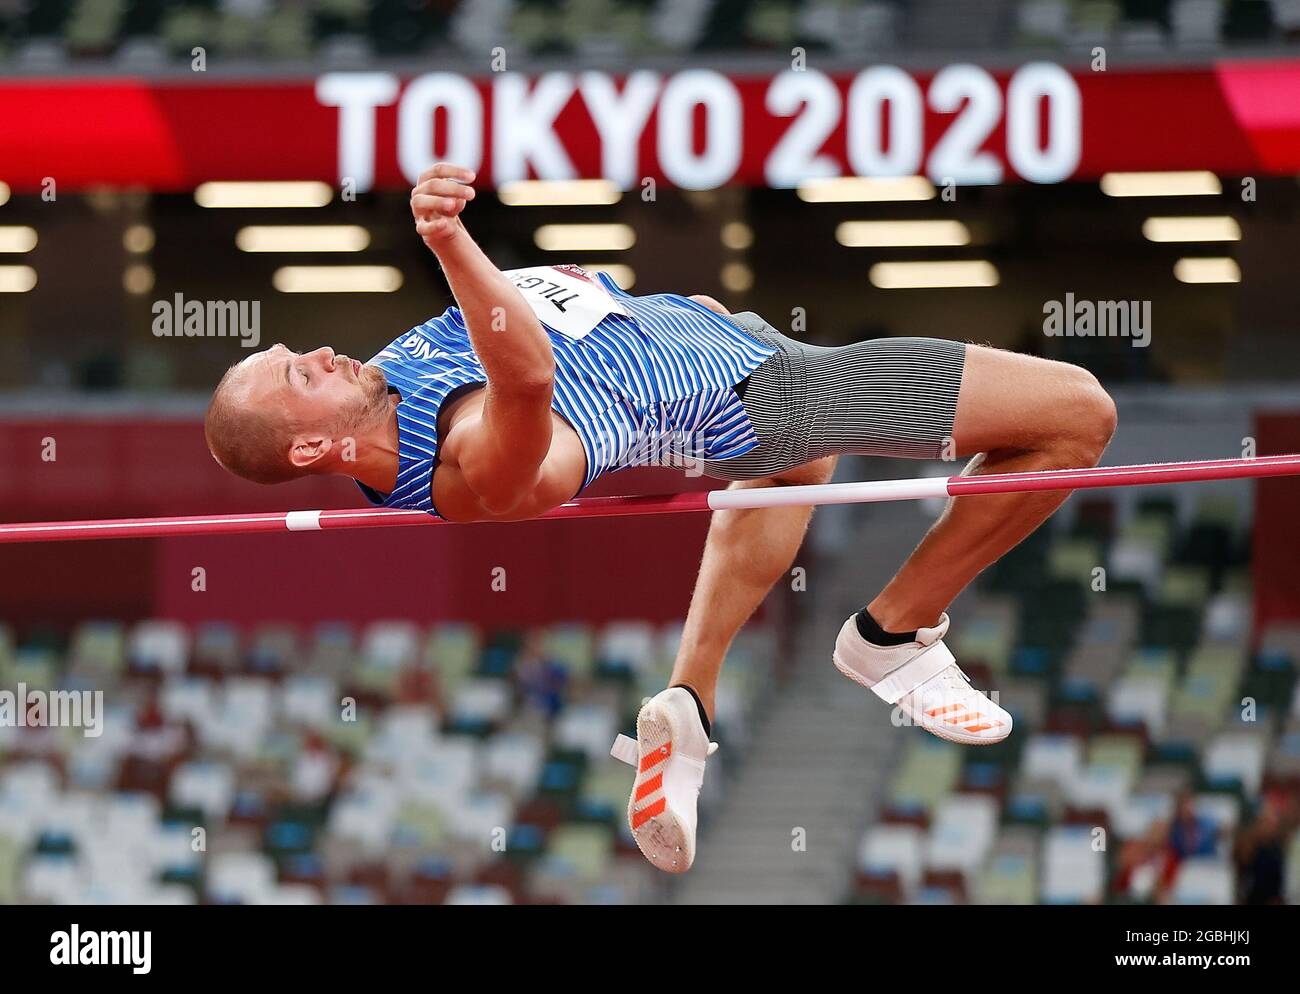 Tokyo, Japan. 4th Aug, 2021. Karel Tilga of Estonia competes during the Men's Decathlon High Jump at the Tokyo 2020 Olympic Games in Tokyo, Japan, Aug. 4, 2021. Credit: Wang Lili/Xinhua/Alamy Live News Stock Photo